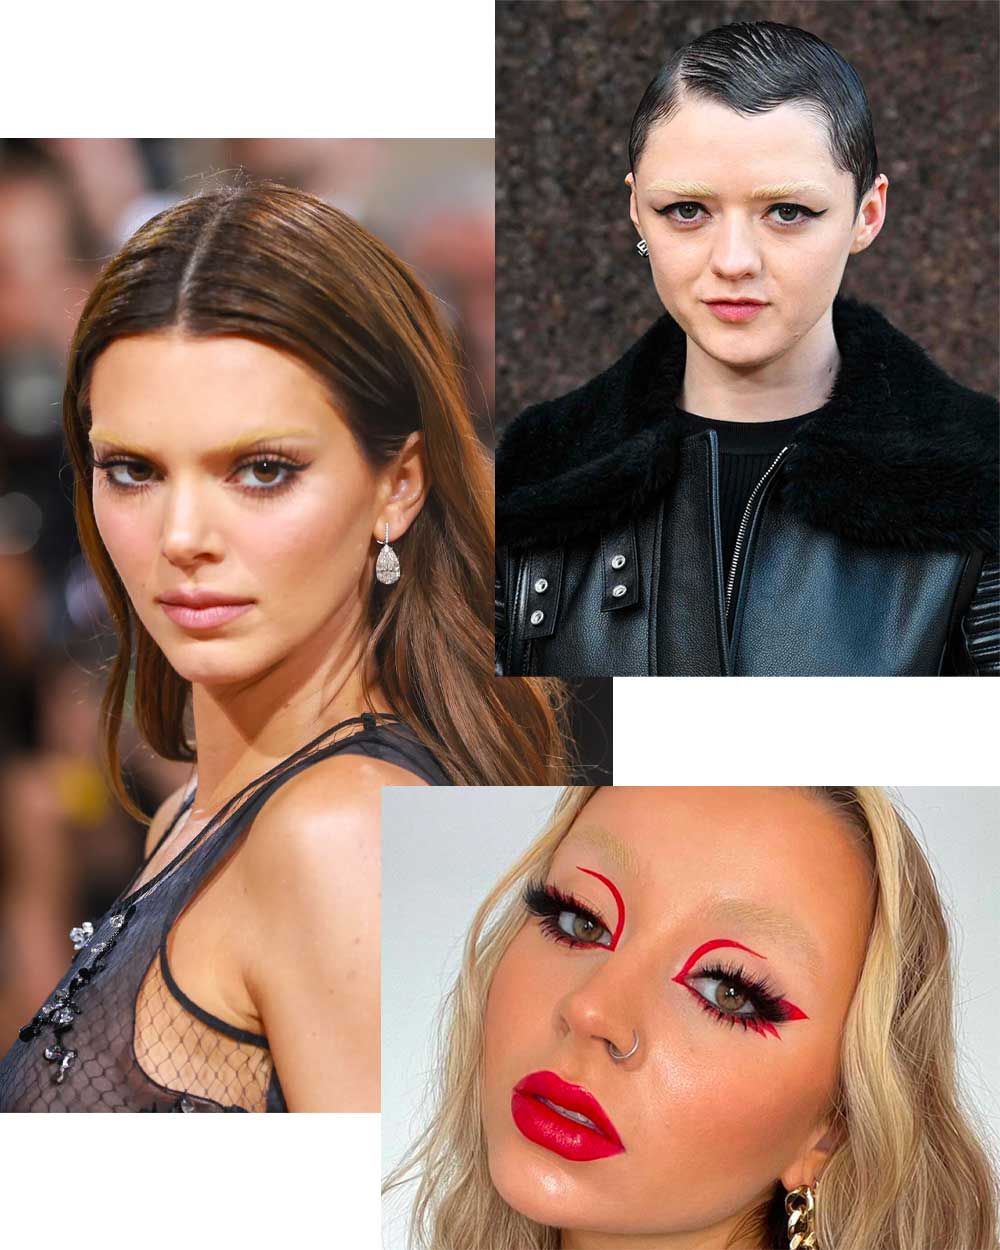 Bleach Eyebrows Beauty trends